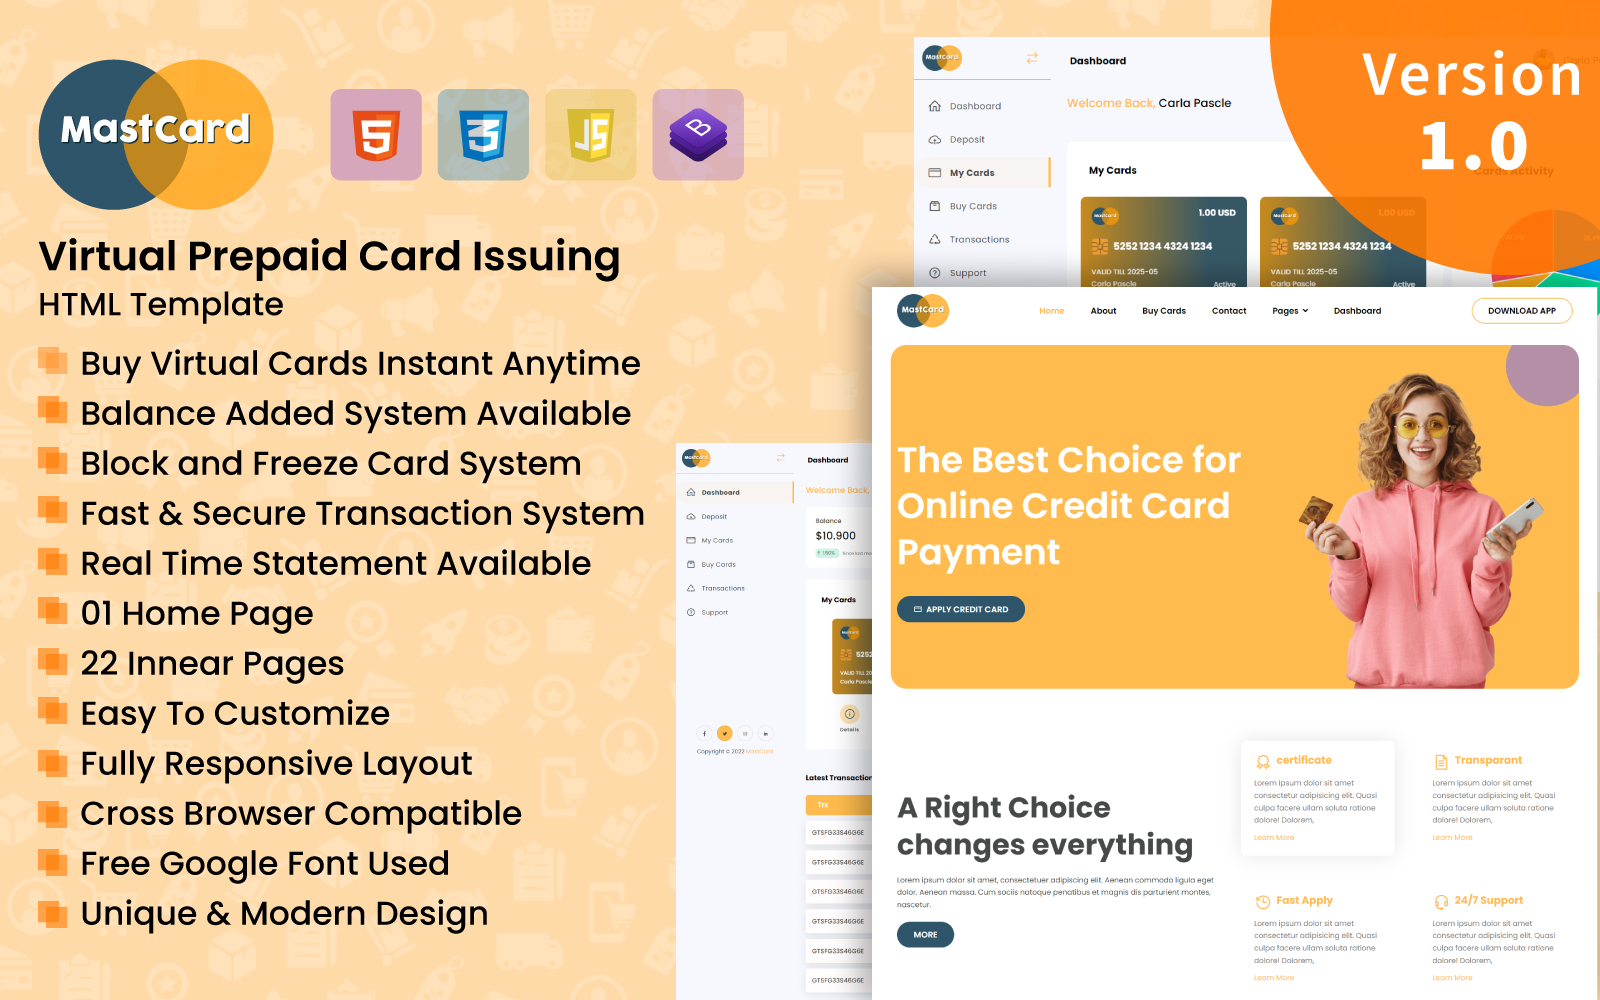 Mastcard - Virtual Prepaid Card Issuing HTML Template